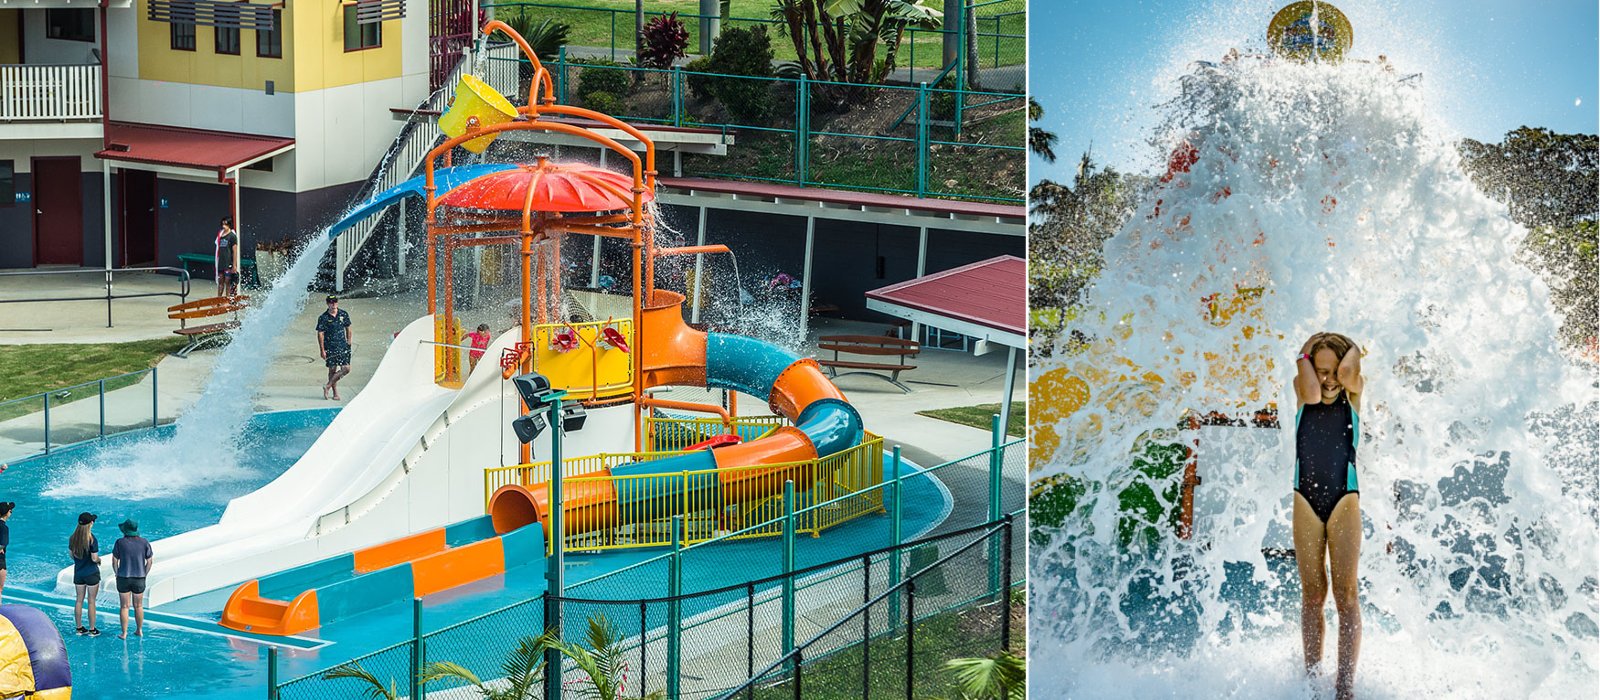 The Big Banana Fun Park Splash Pad